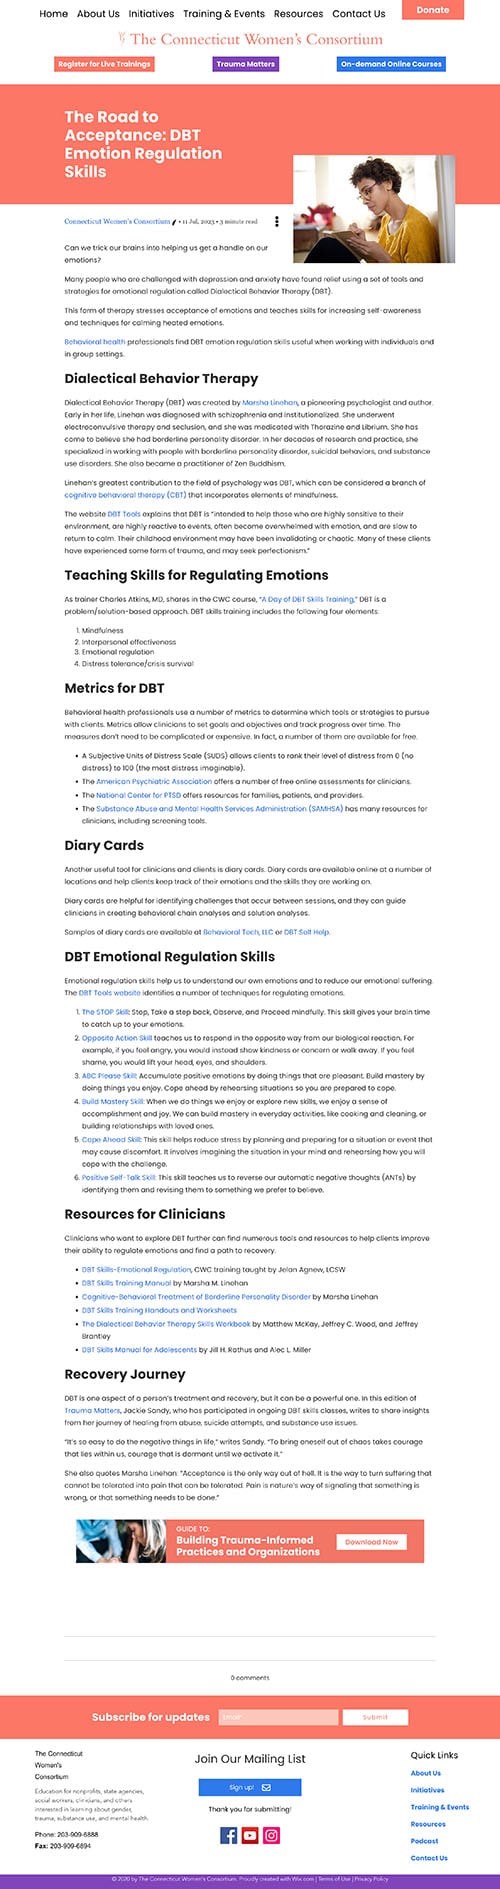 CWC-BLOG-The-Road-to-Acceptance_DBT-Emotion-Regulation-Skills